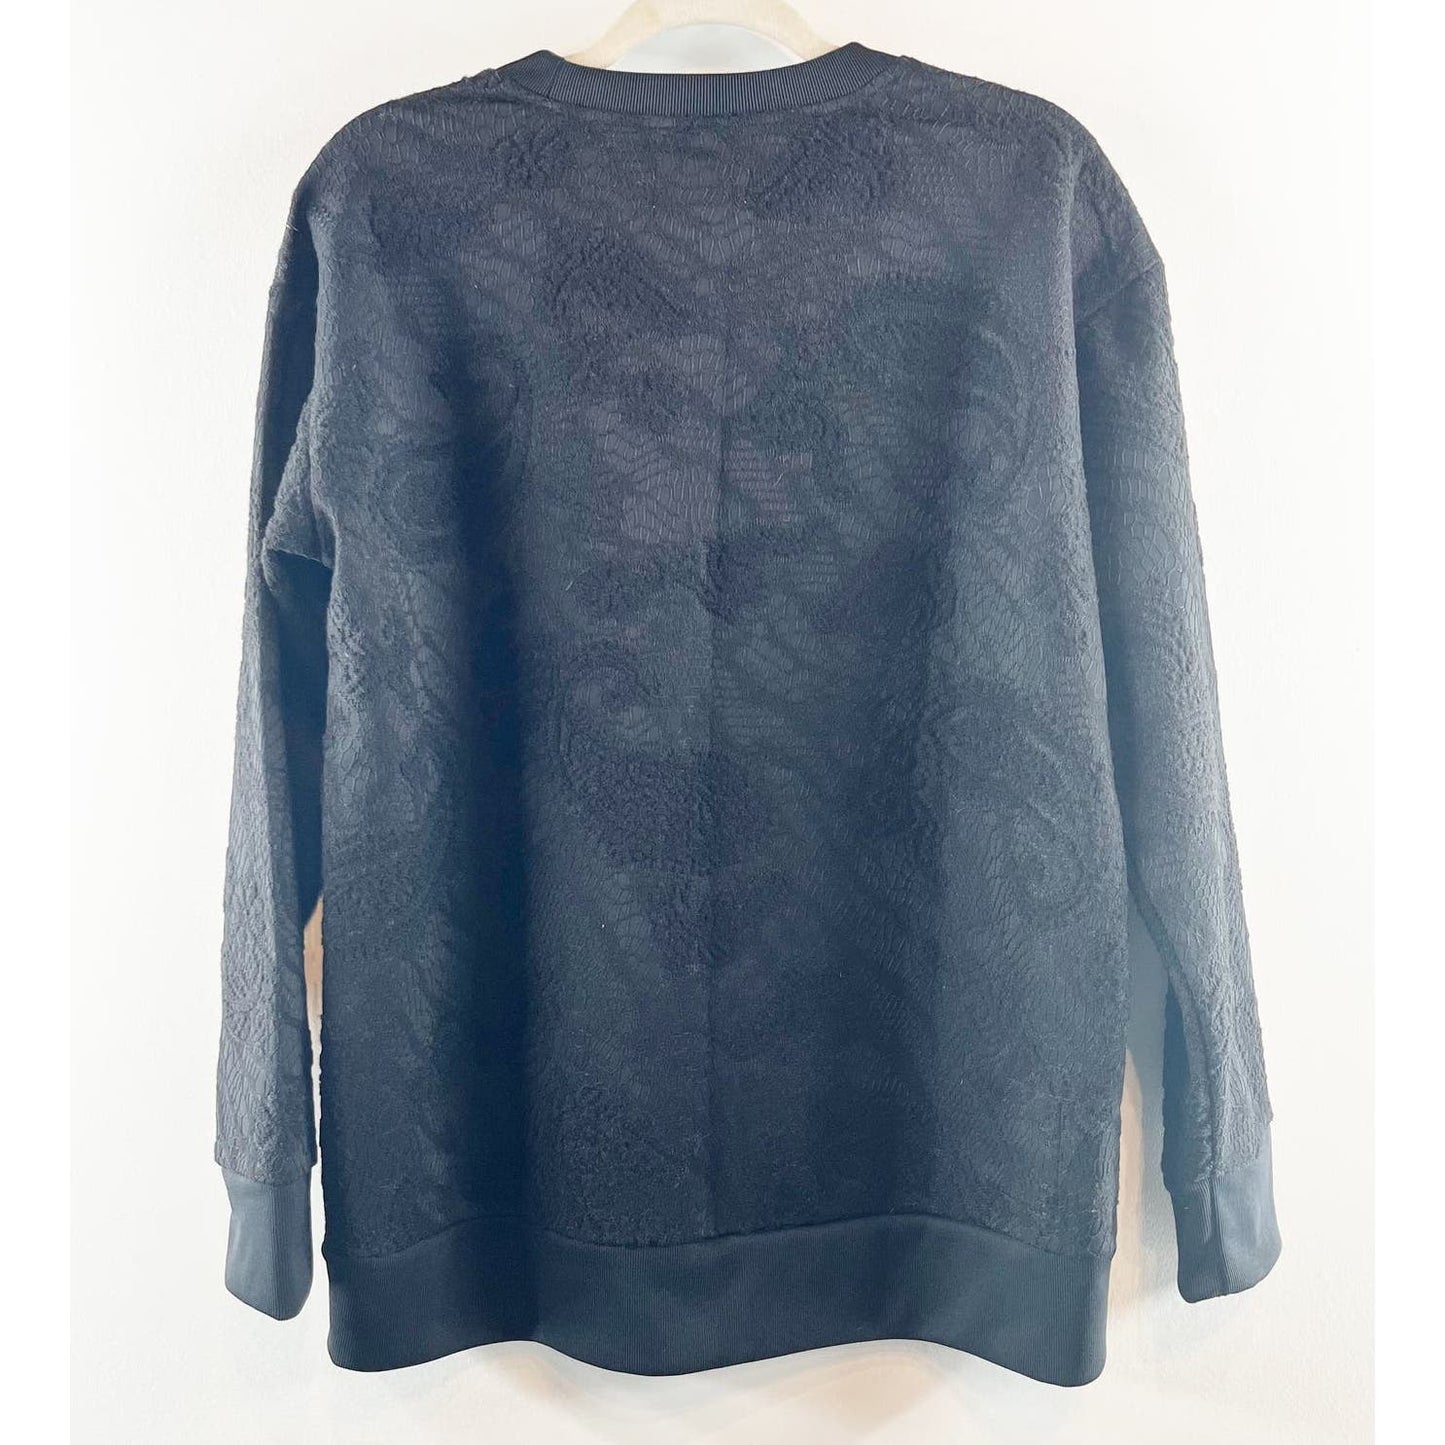 Adidas Limited Edition Trefoil Lace Textured Crewneck Sweatshirt Black Small